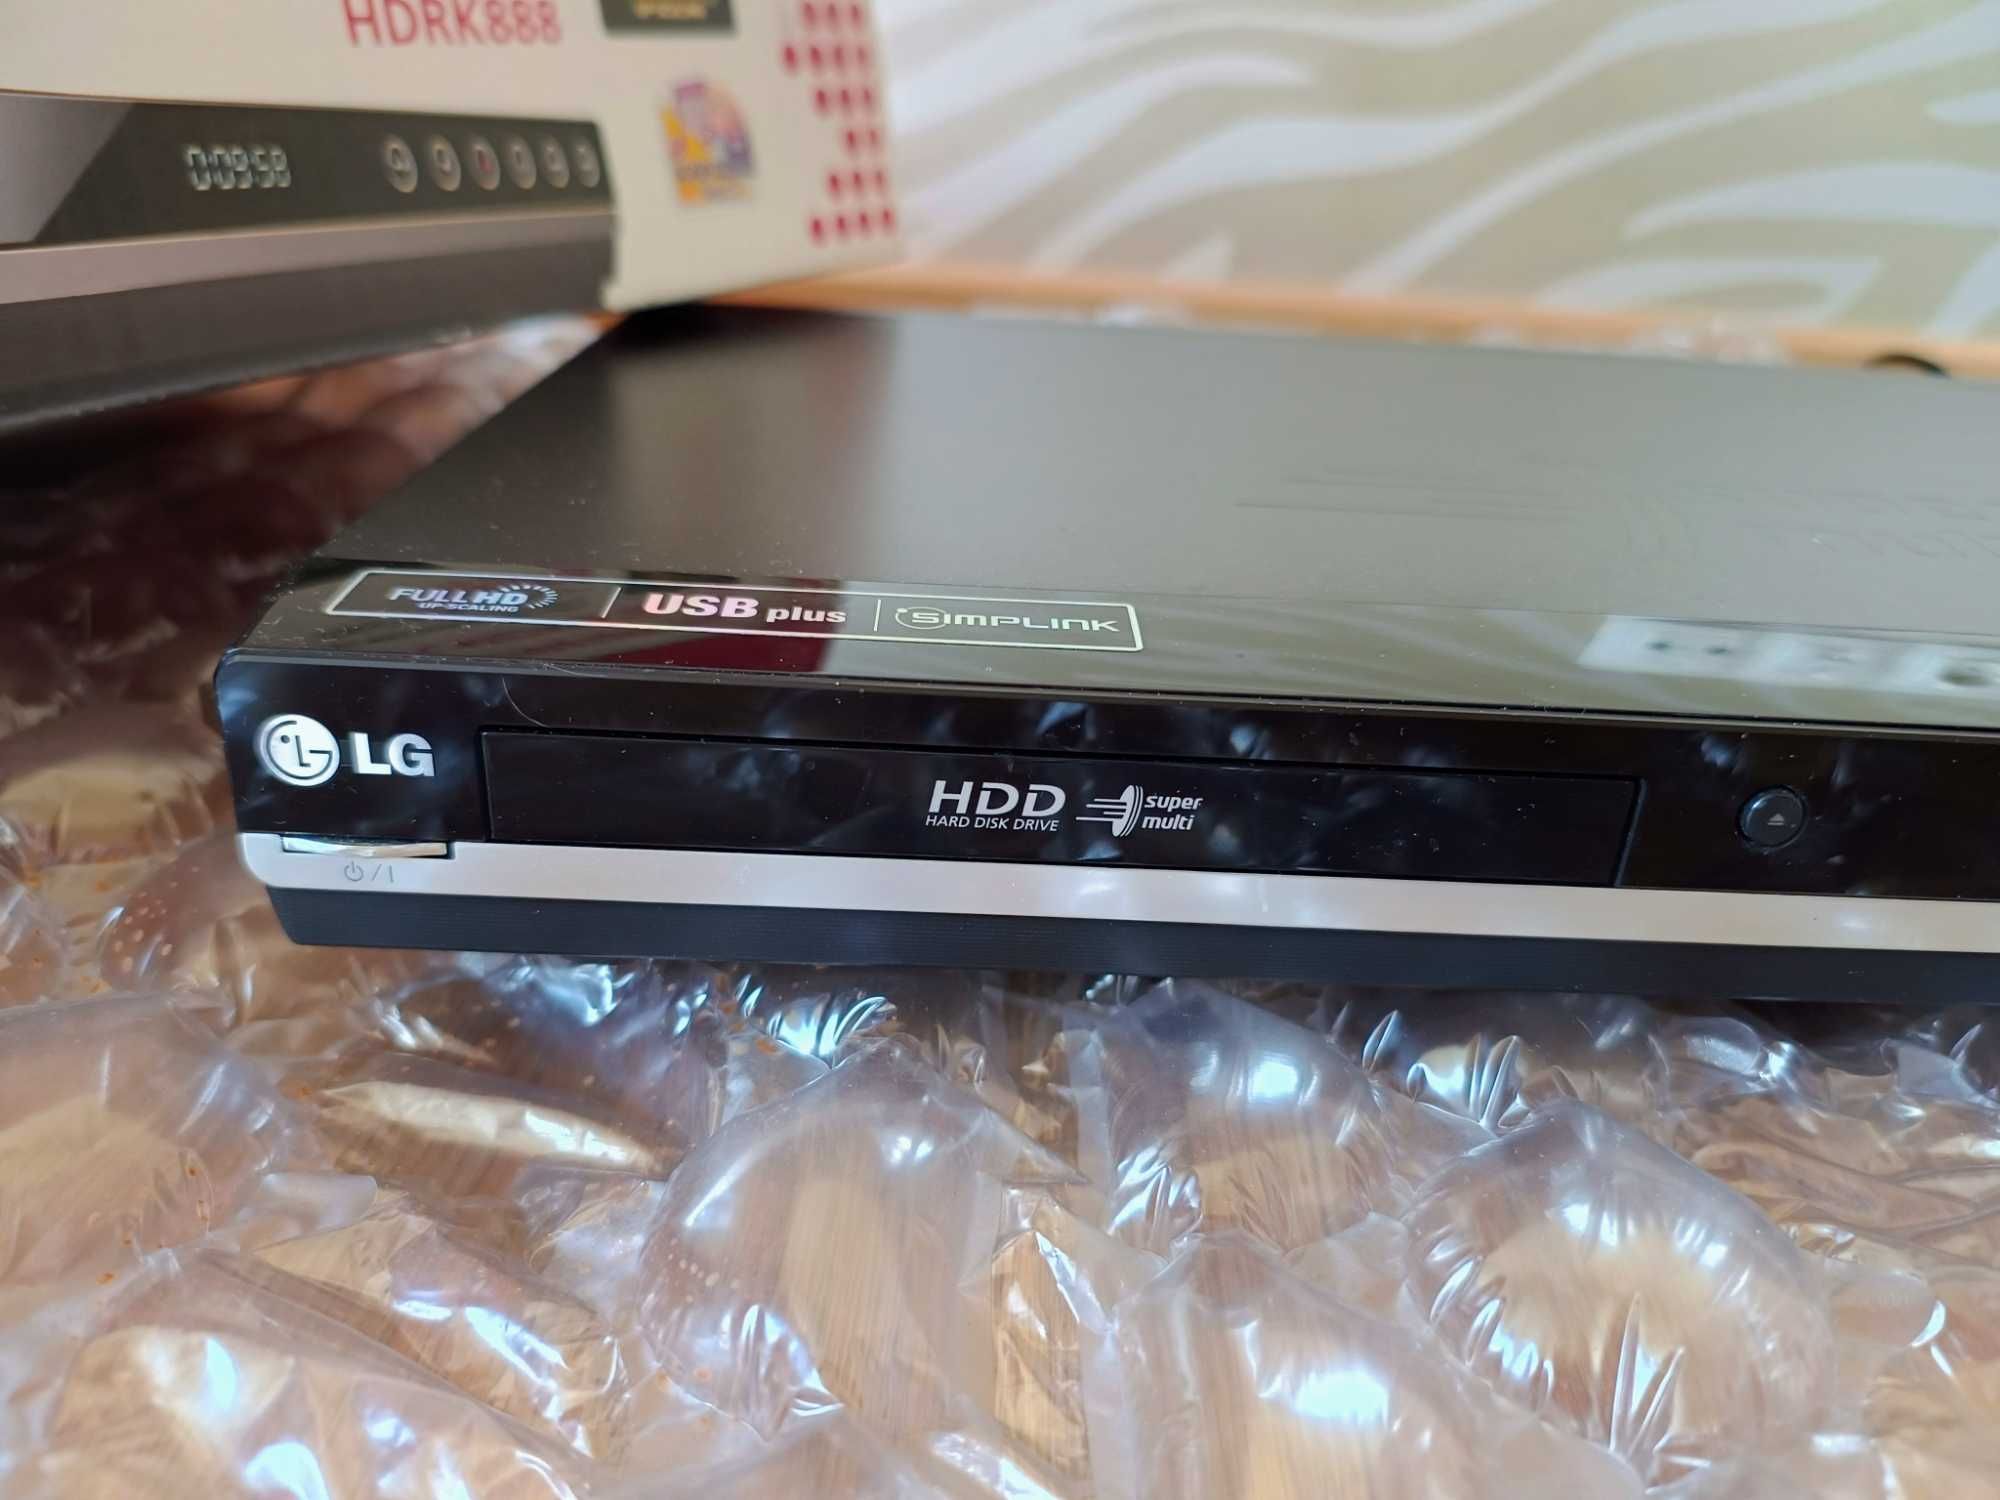 LG hdrk888 DVD-плейер с жестким диском